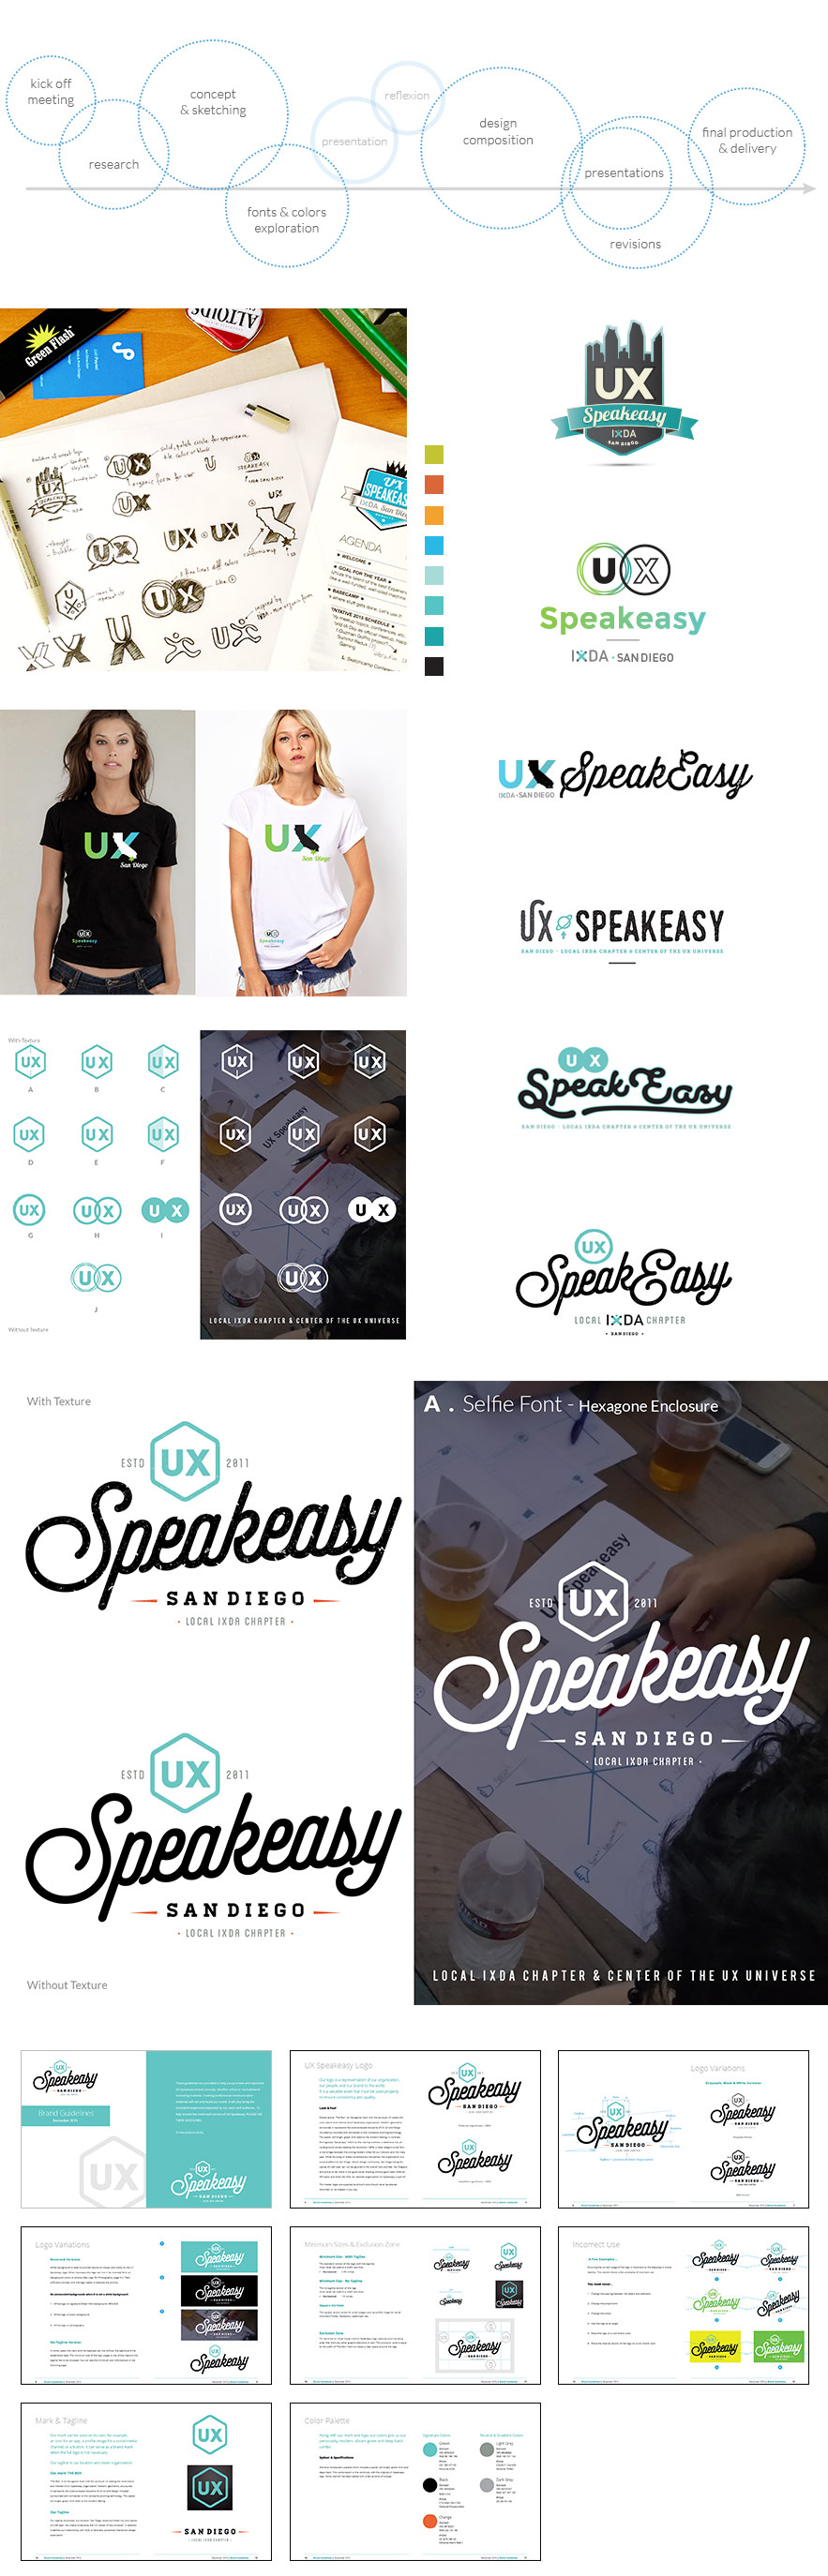 UXspeakeasy branding and logotypes